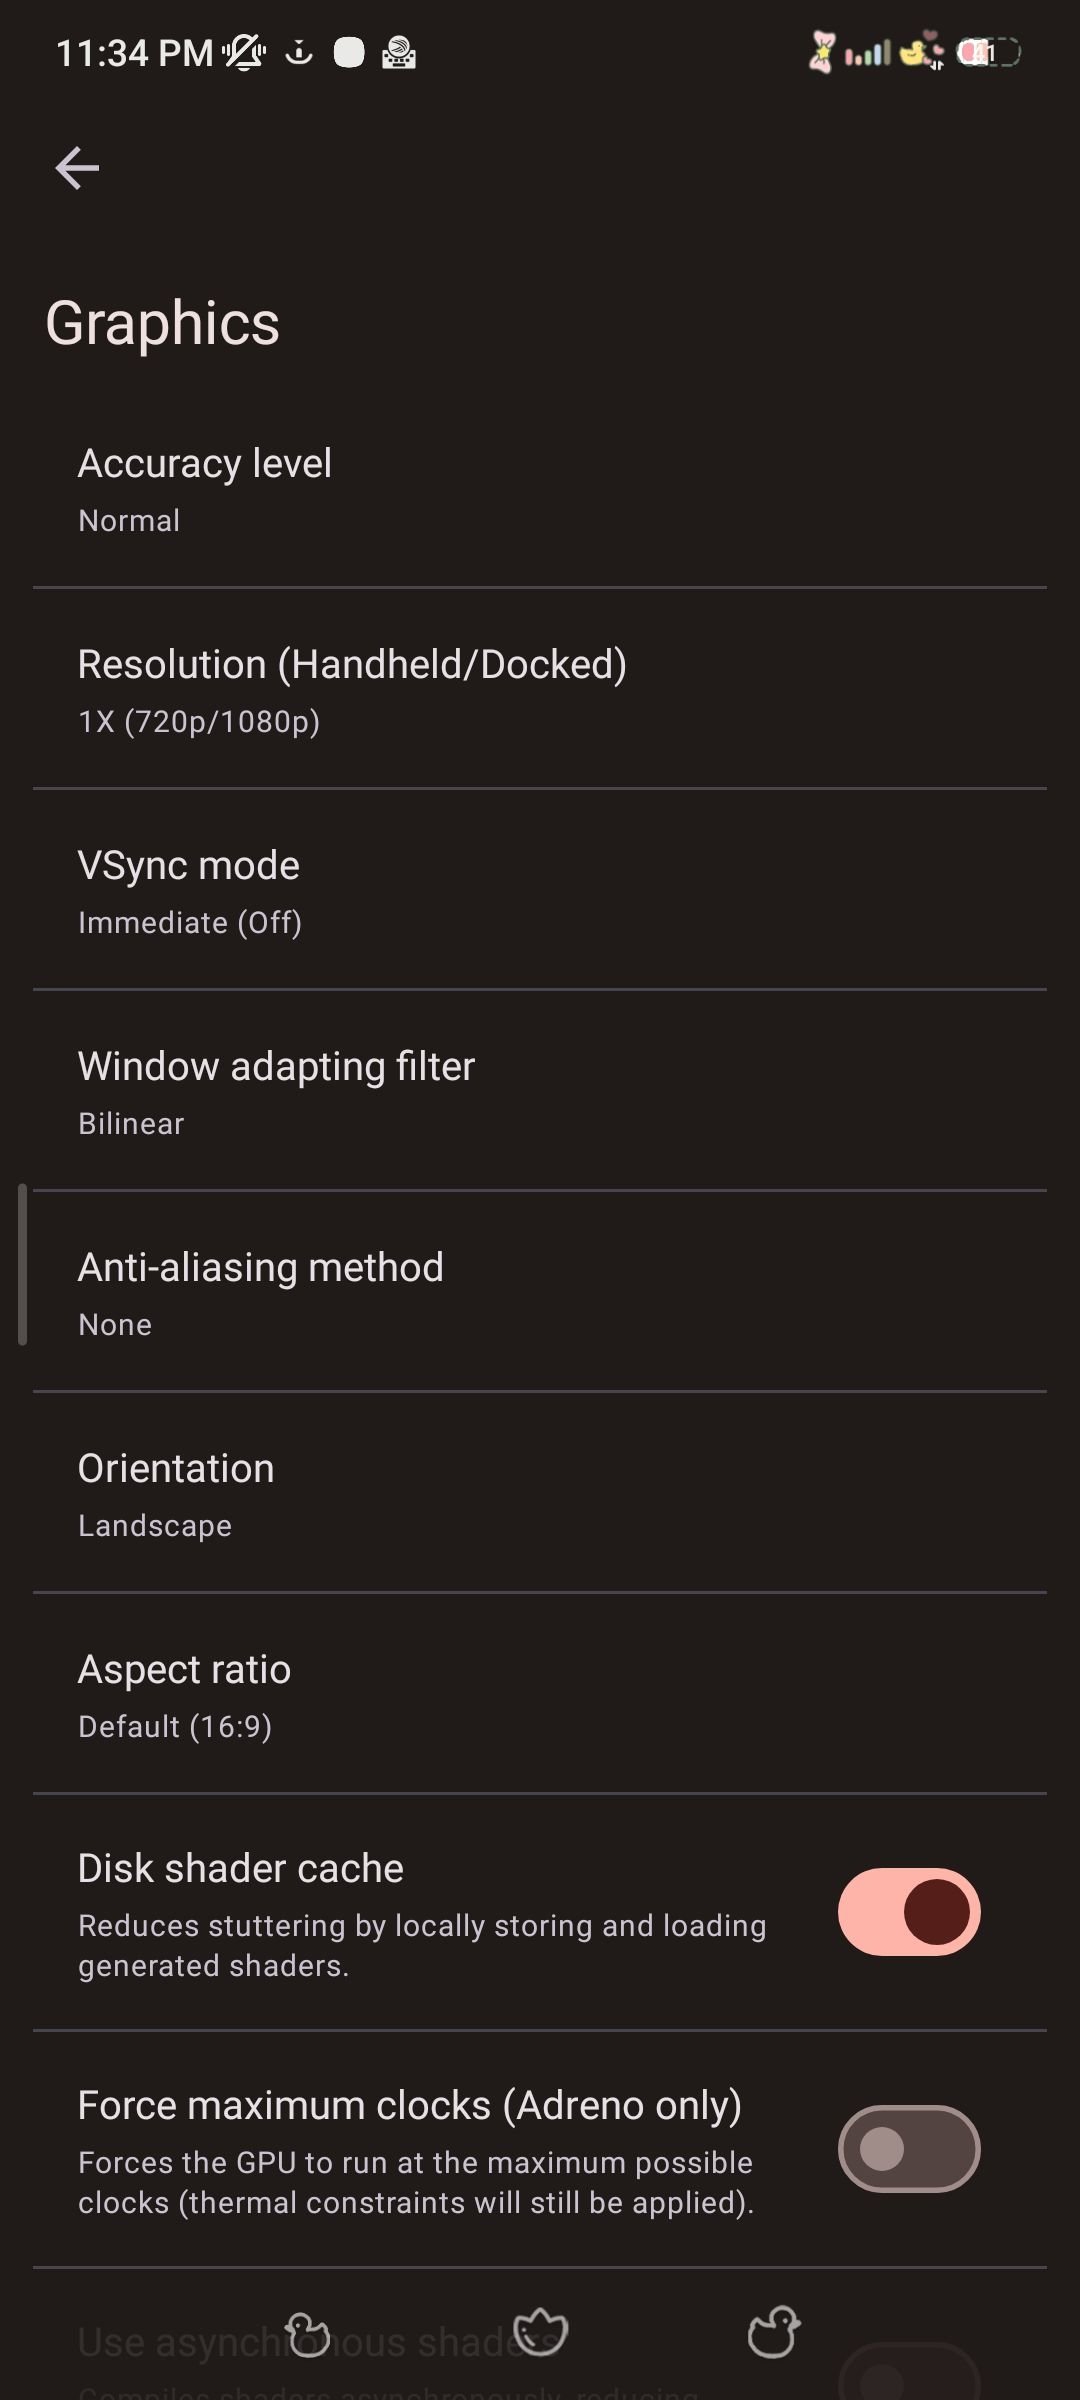 Yuzu Emulator APK (Android App) - Free Download